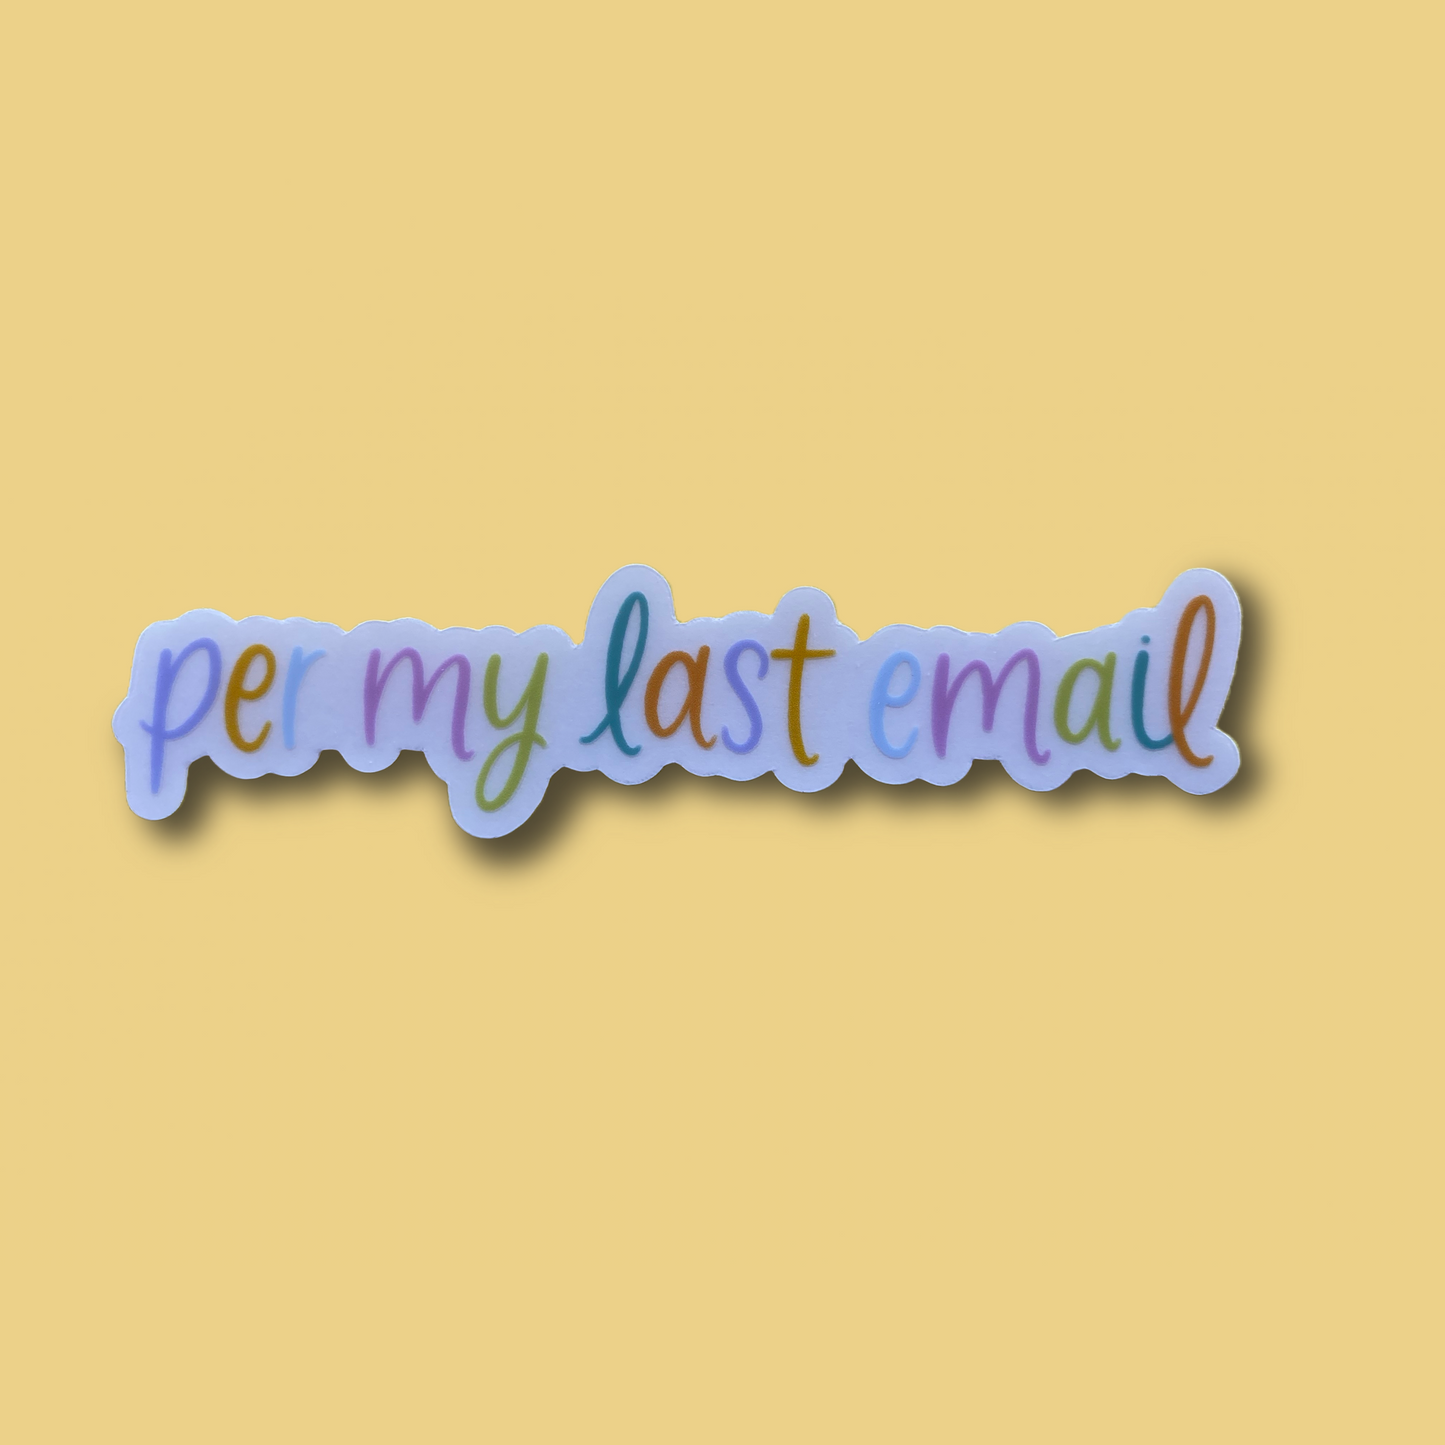 Per My Last Email Sticker, 3.25x0.75in